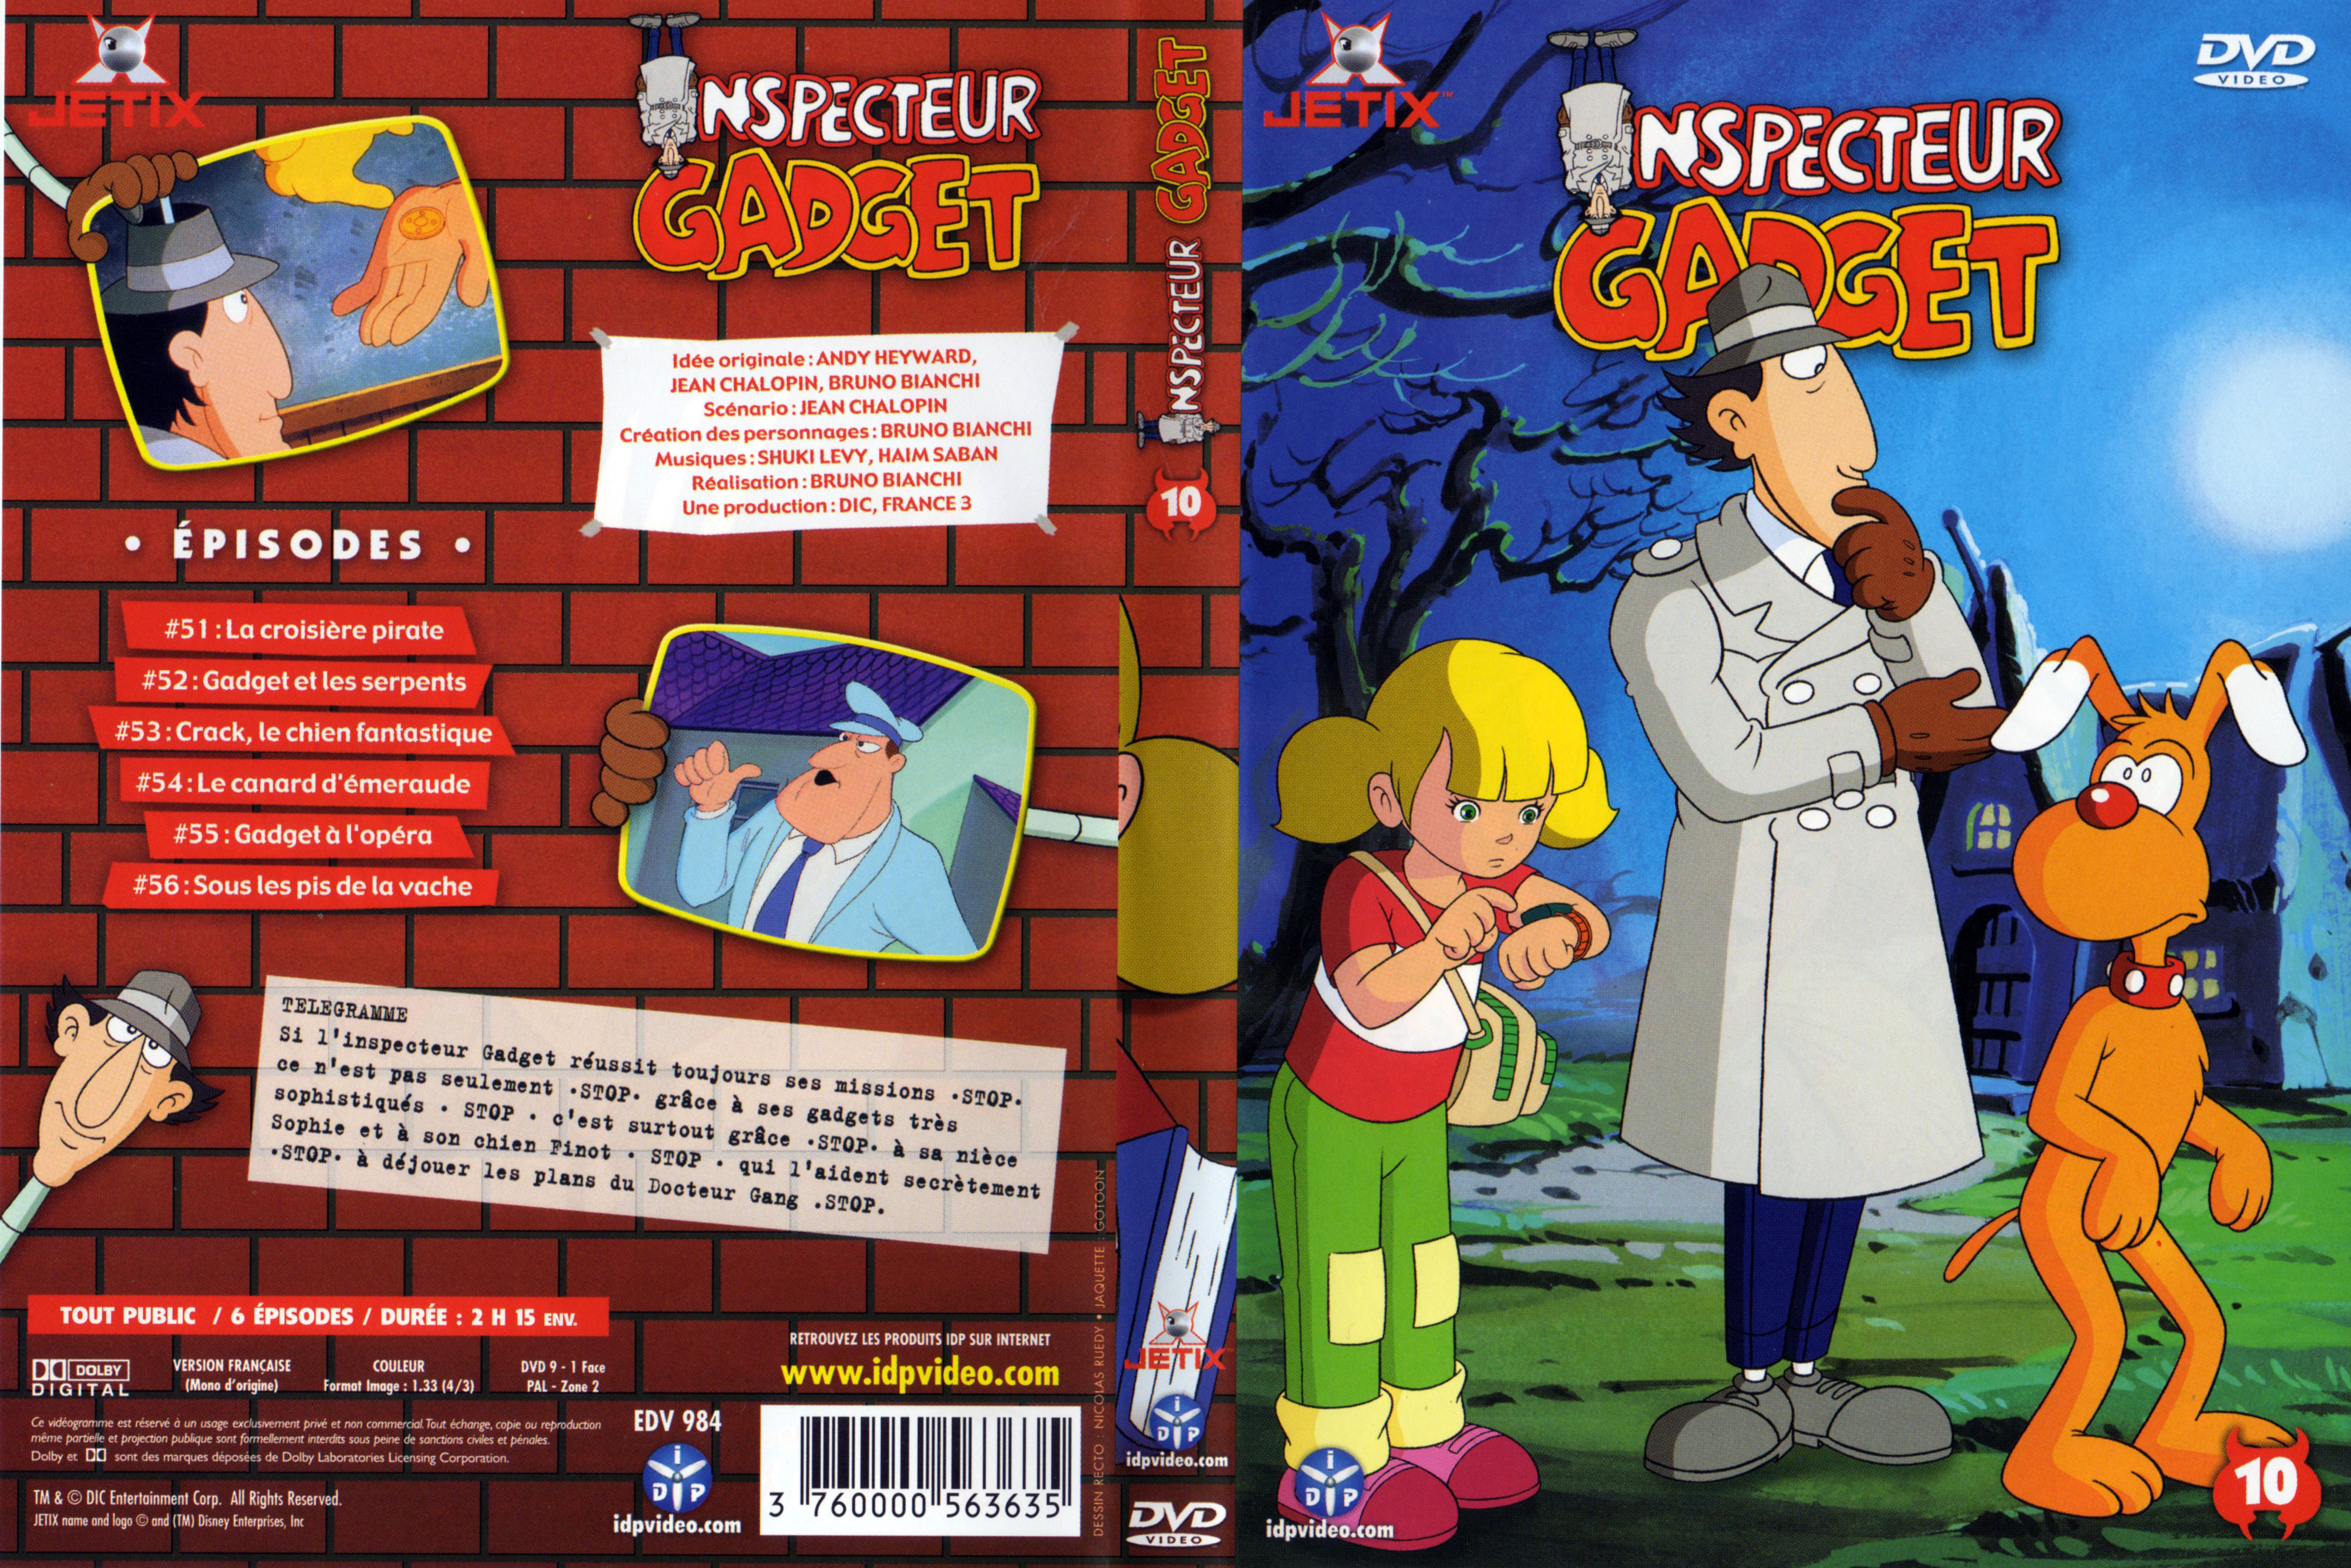 Jaquette DVD Inspecteur Gadget vol 10